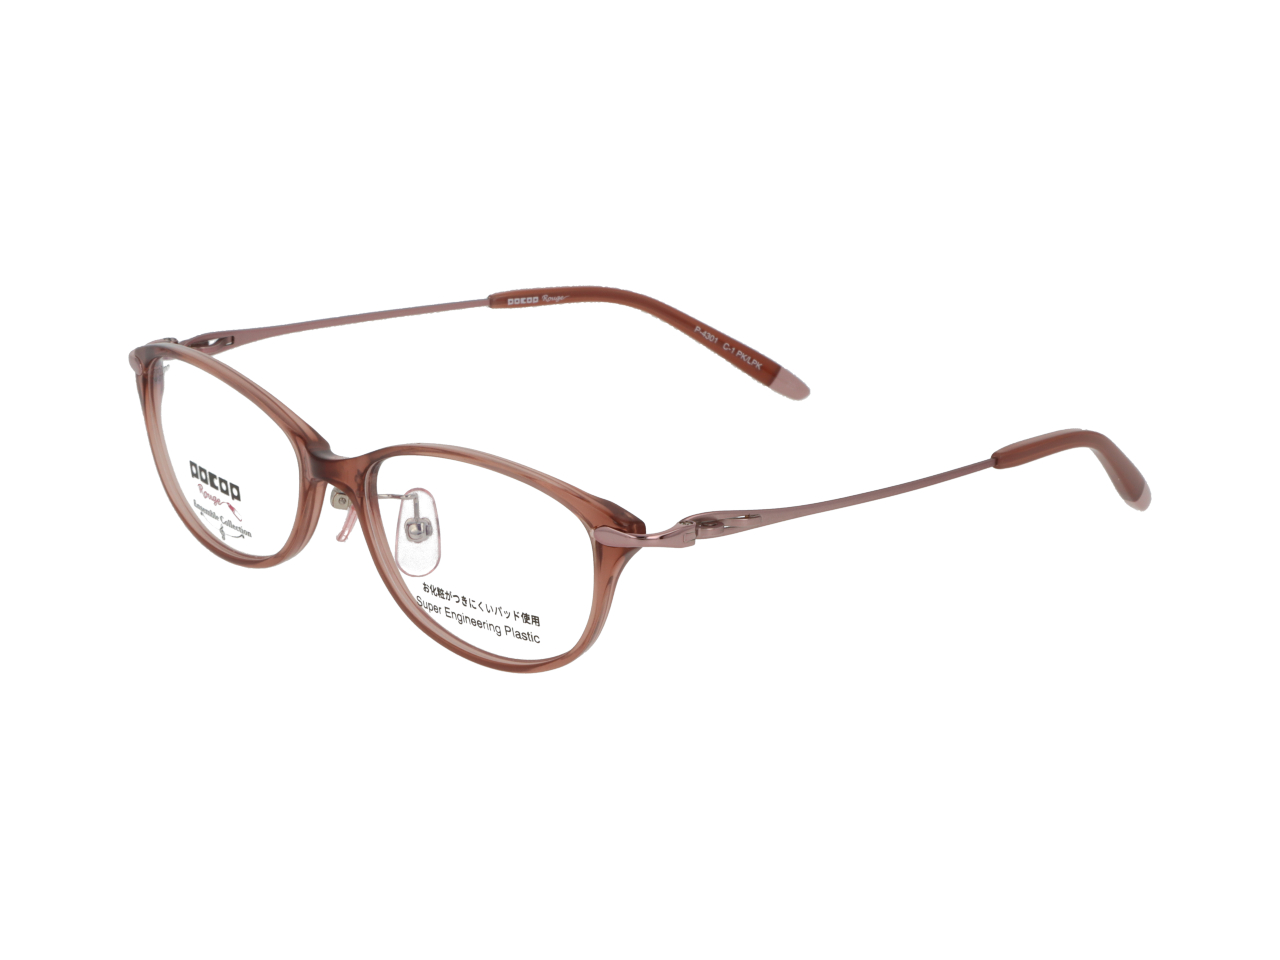 POCOP Rouge 4301 | メガネの愛眼 - めがね・サングラス・コンタクトレンズ・補聴器等をご提供する眼鏡専門店